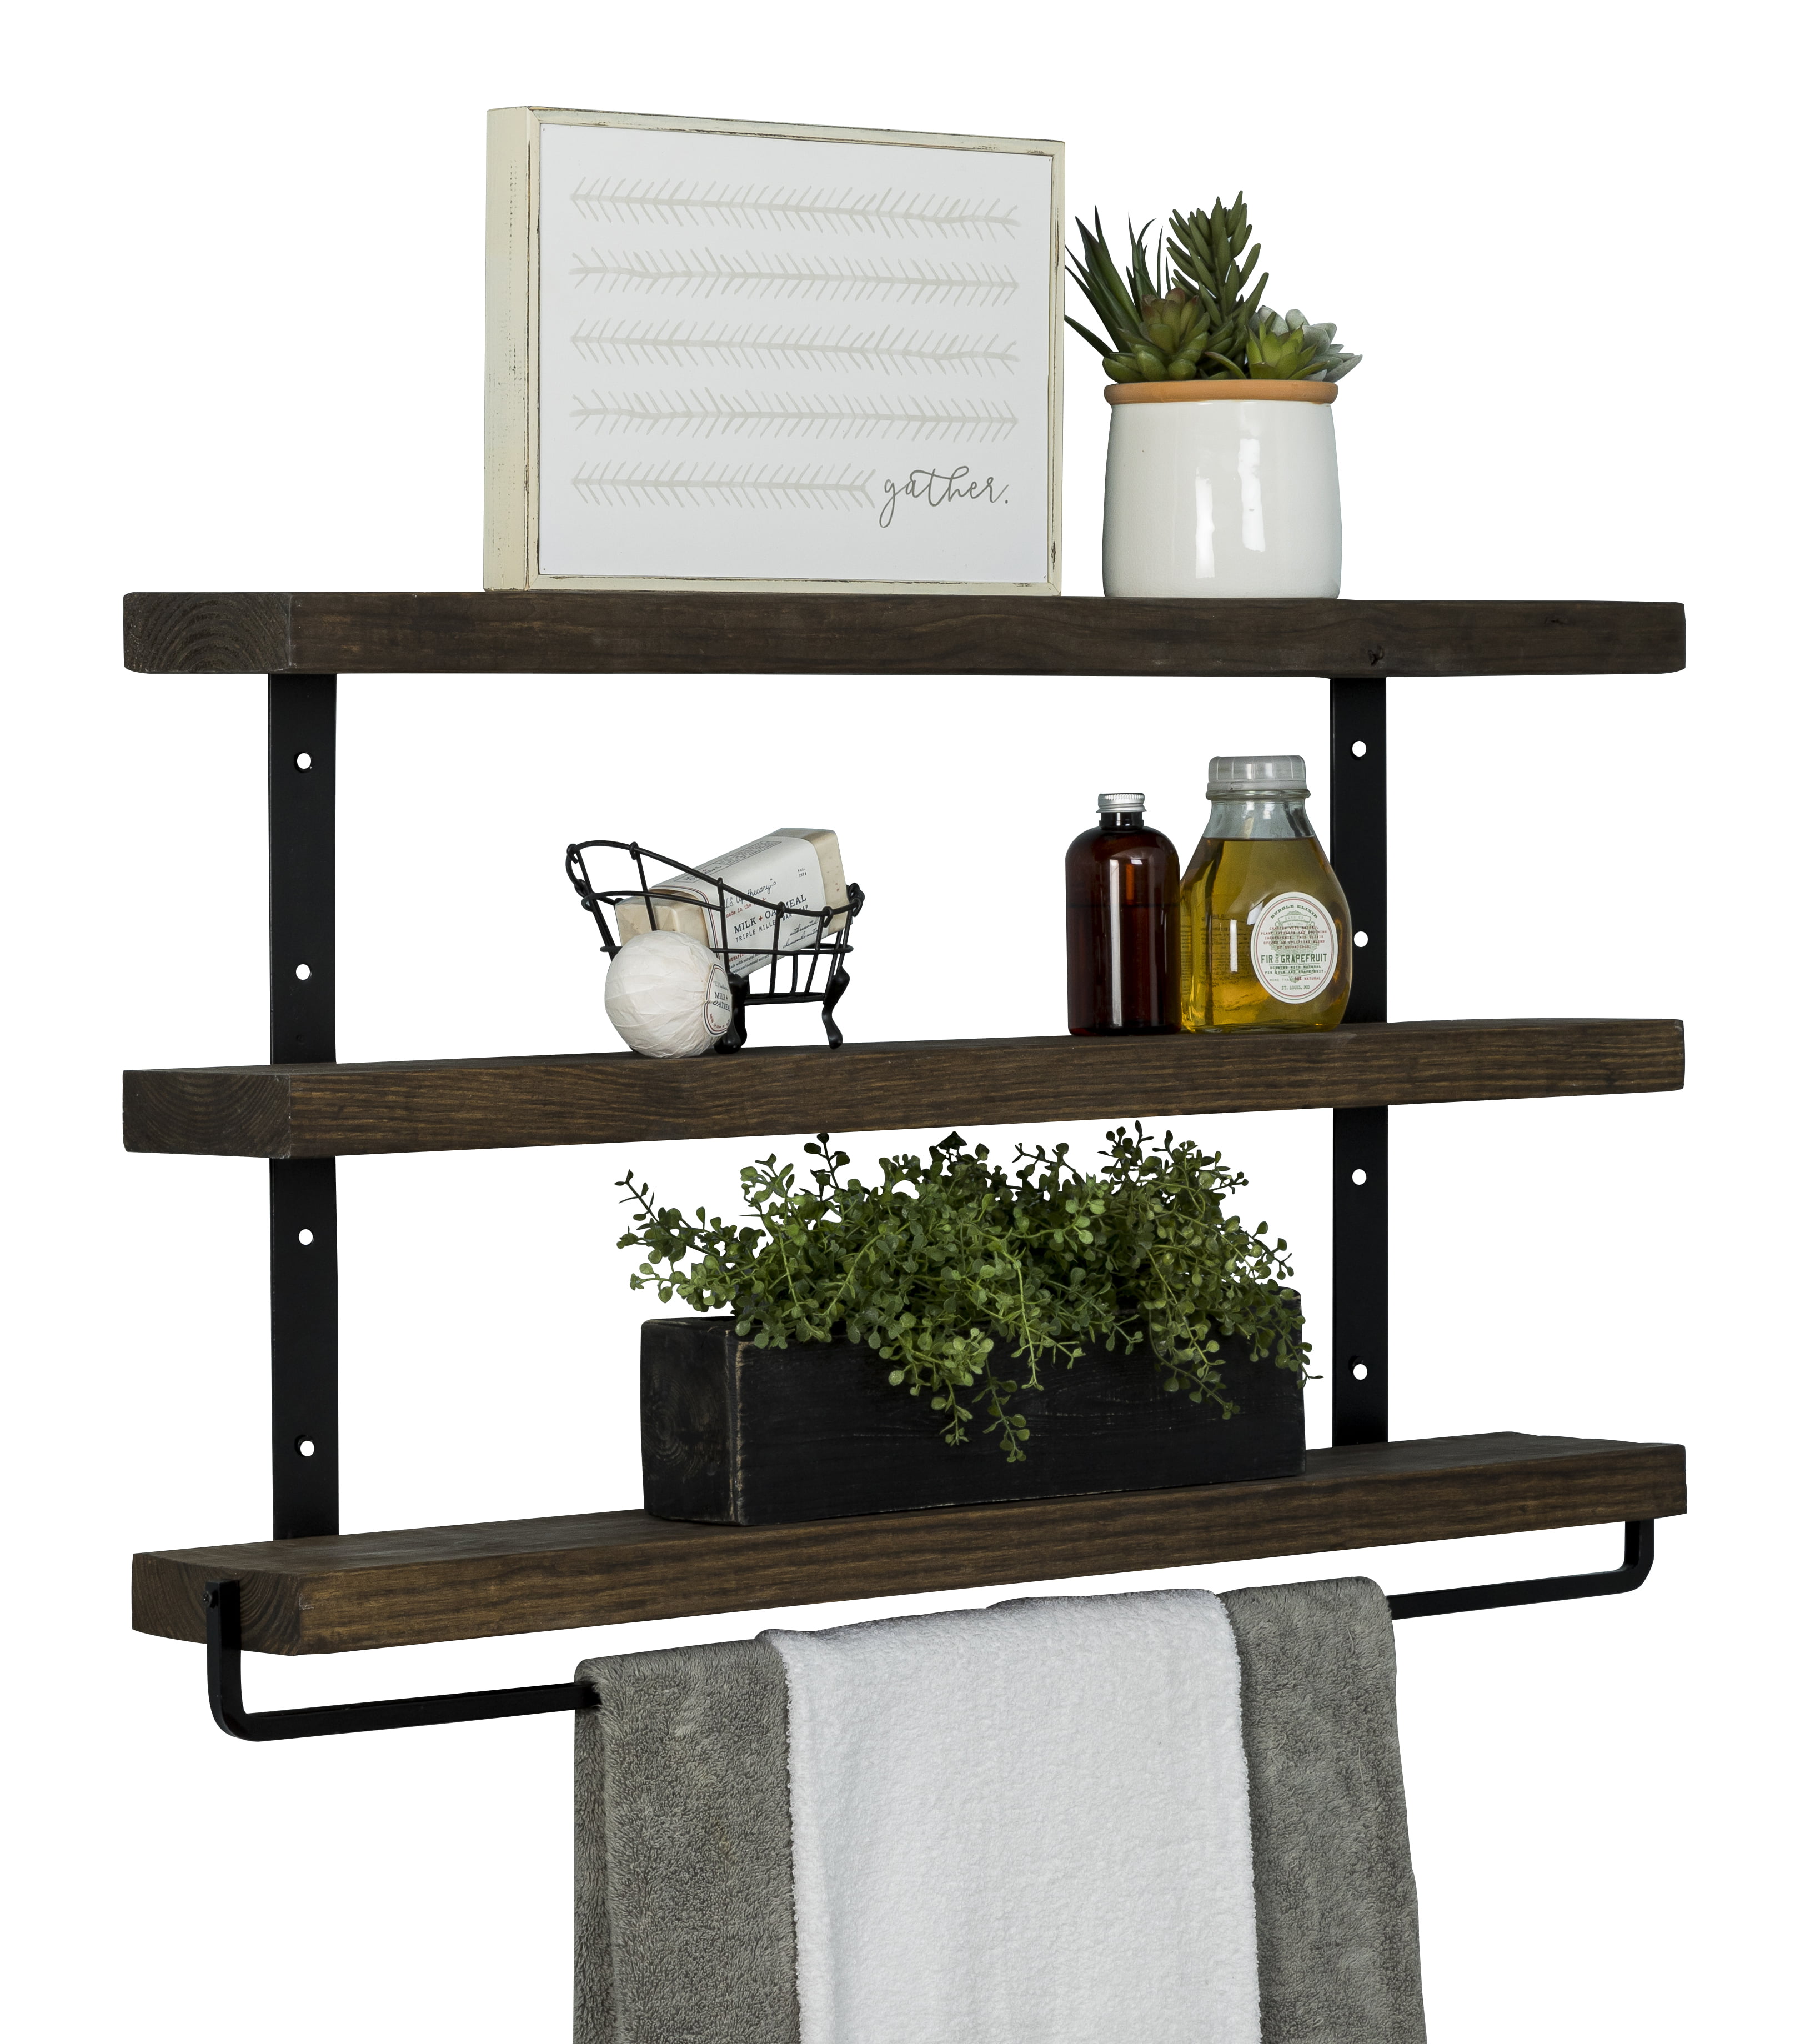 UNHO Floating Shelf 2-Tier Wall Shelf Industrial Decorative Hanging Kitchen Bathroom